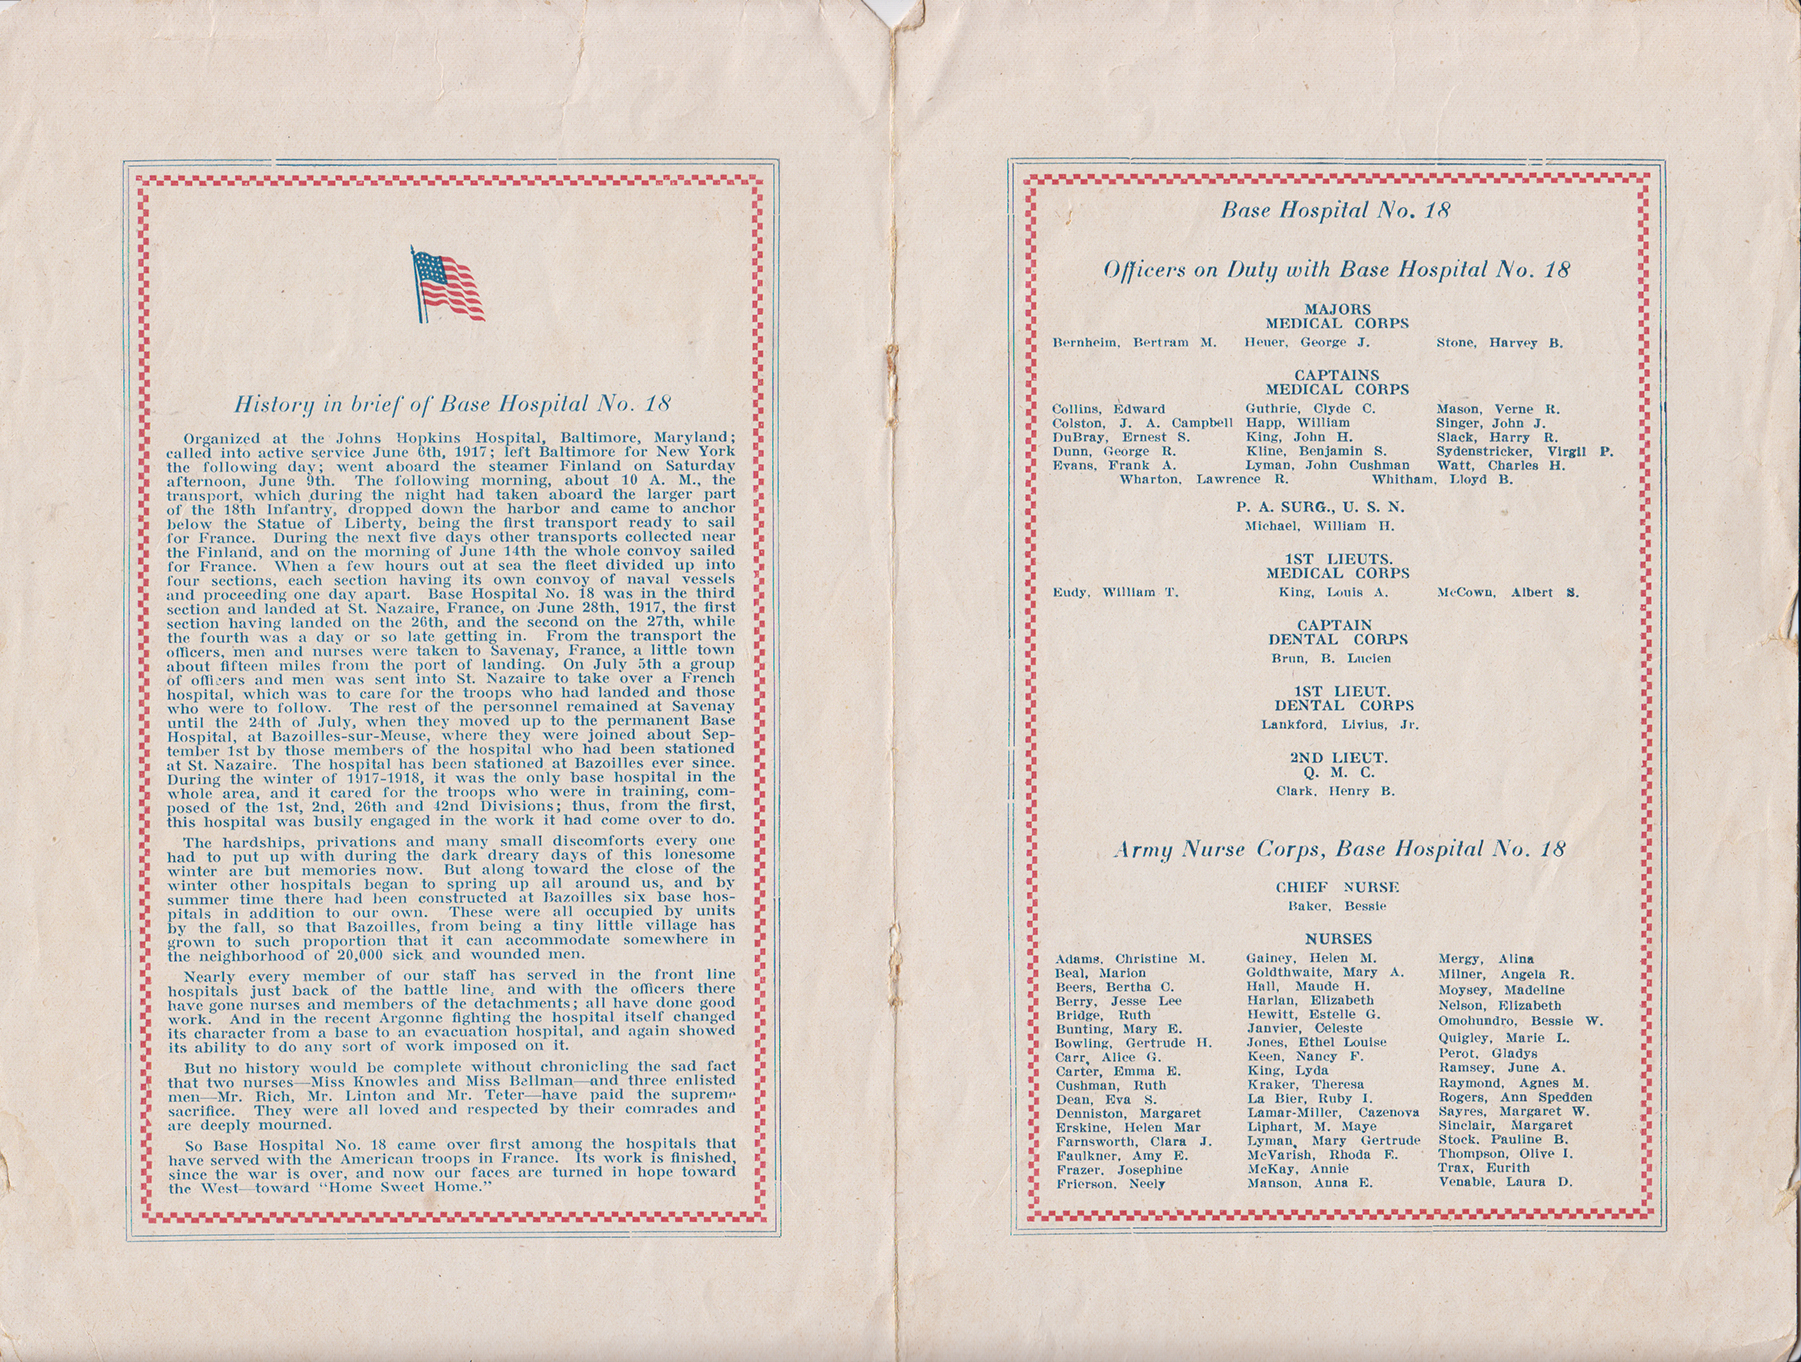 Base Hospital 18, Thanksgiving Dinner Menu, Nov. 18, 1918, history and personnel